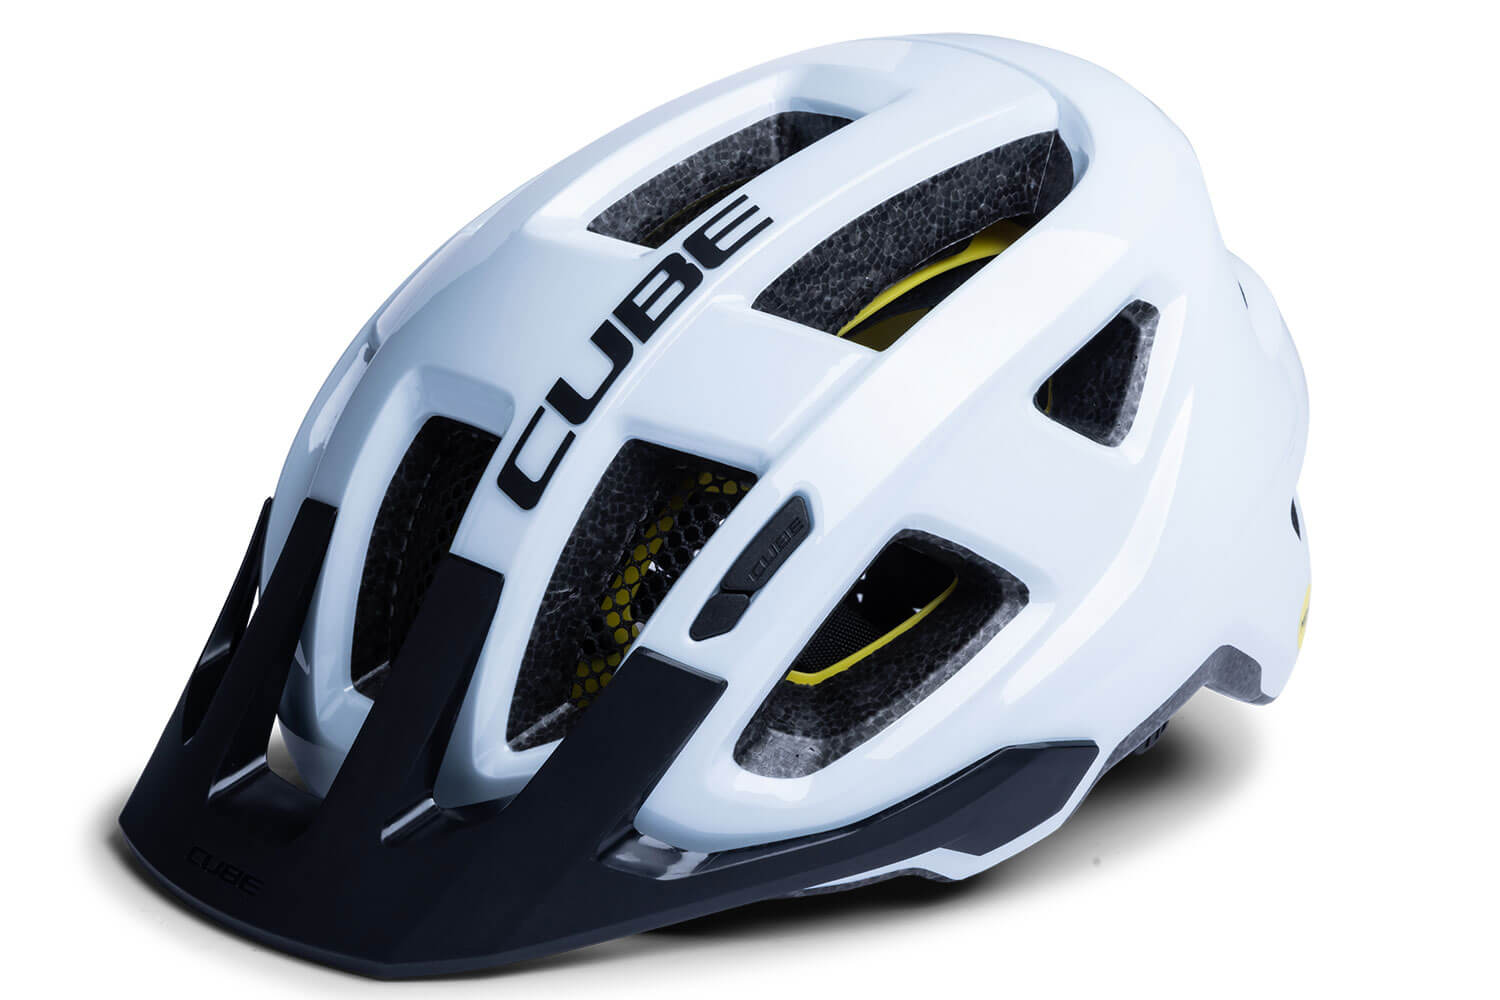 Cube Helm Fleet - ein All-Terrain-Helm